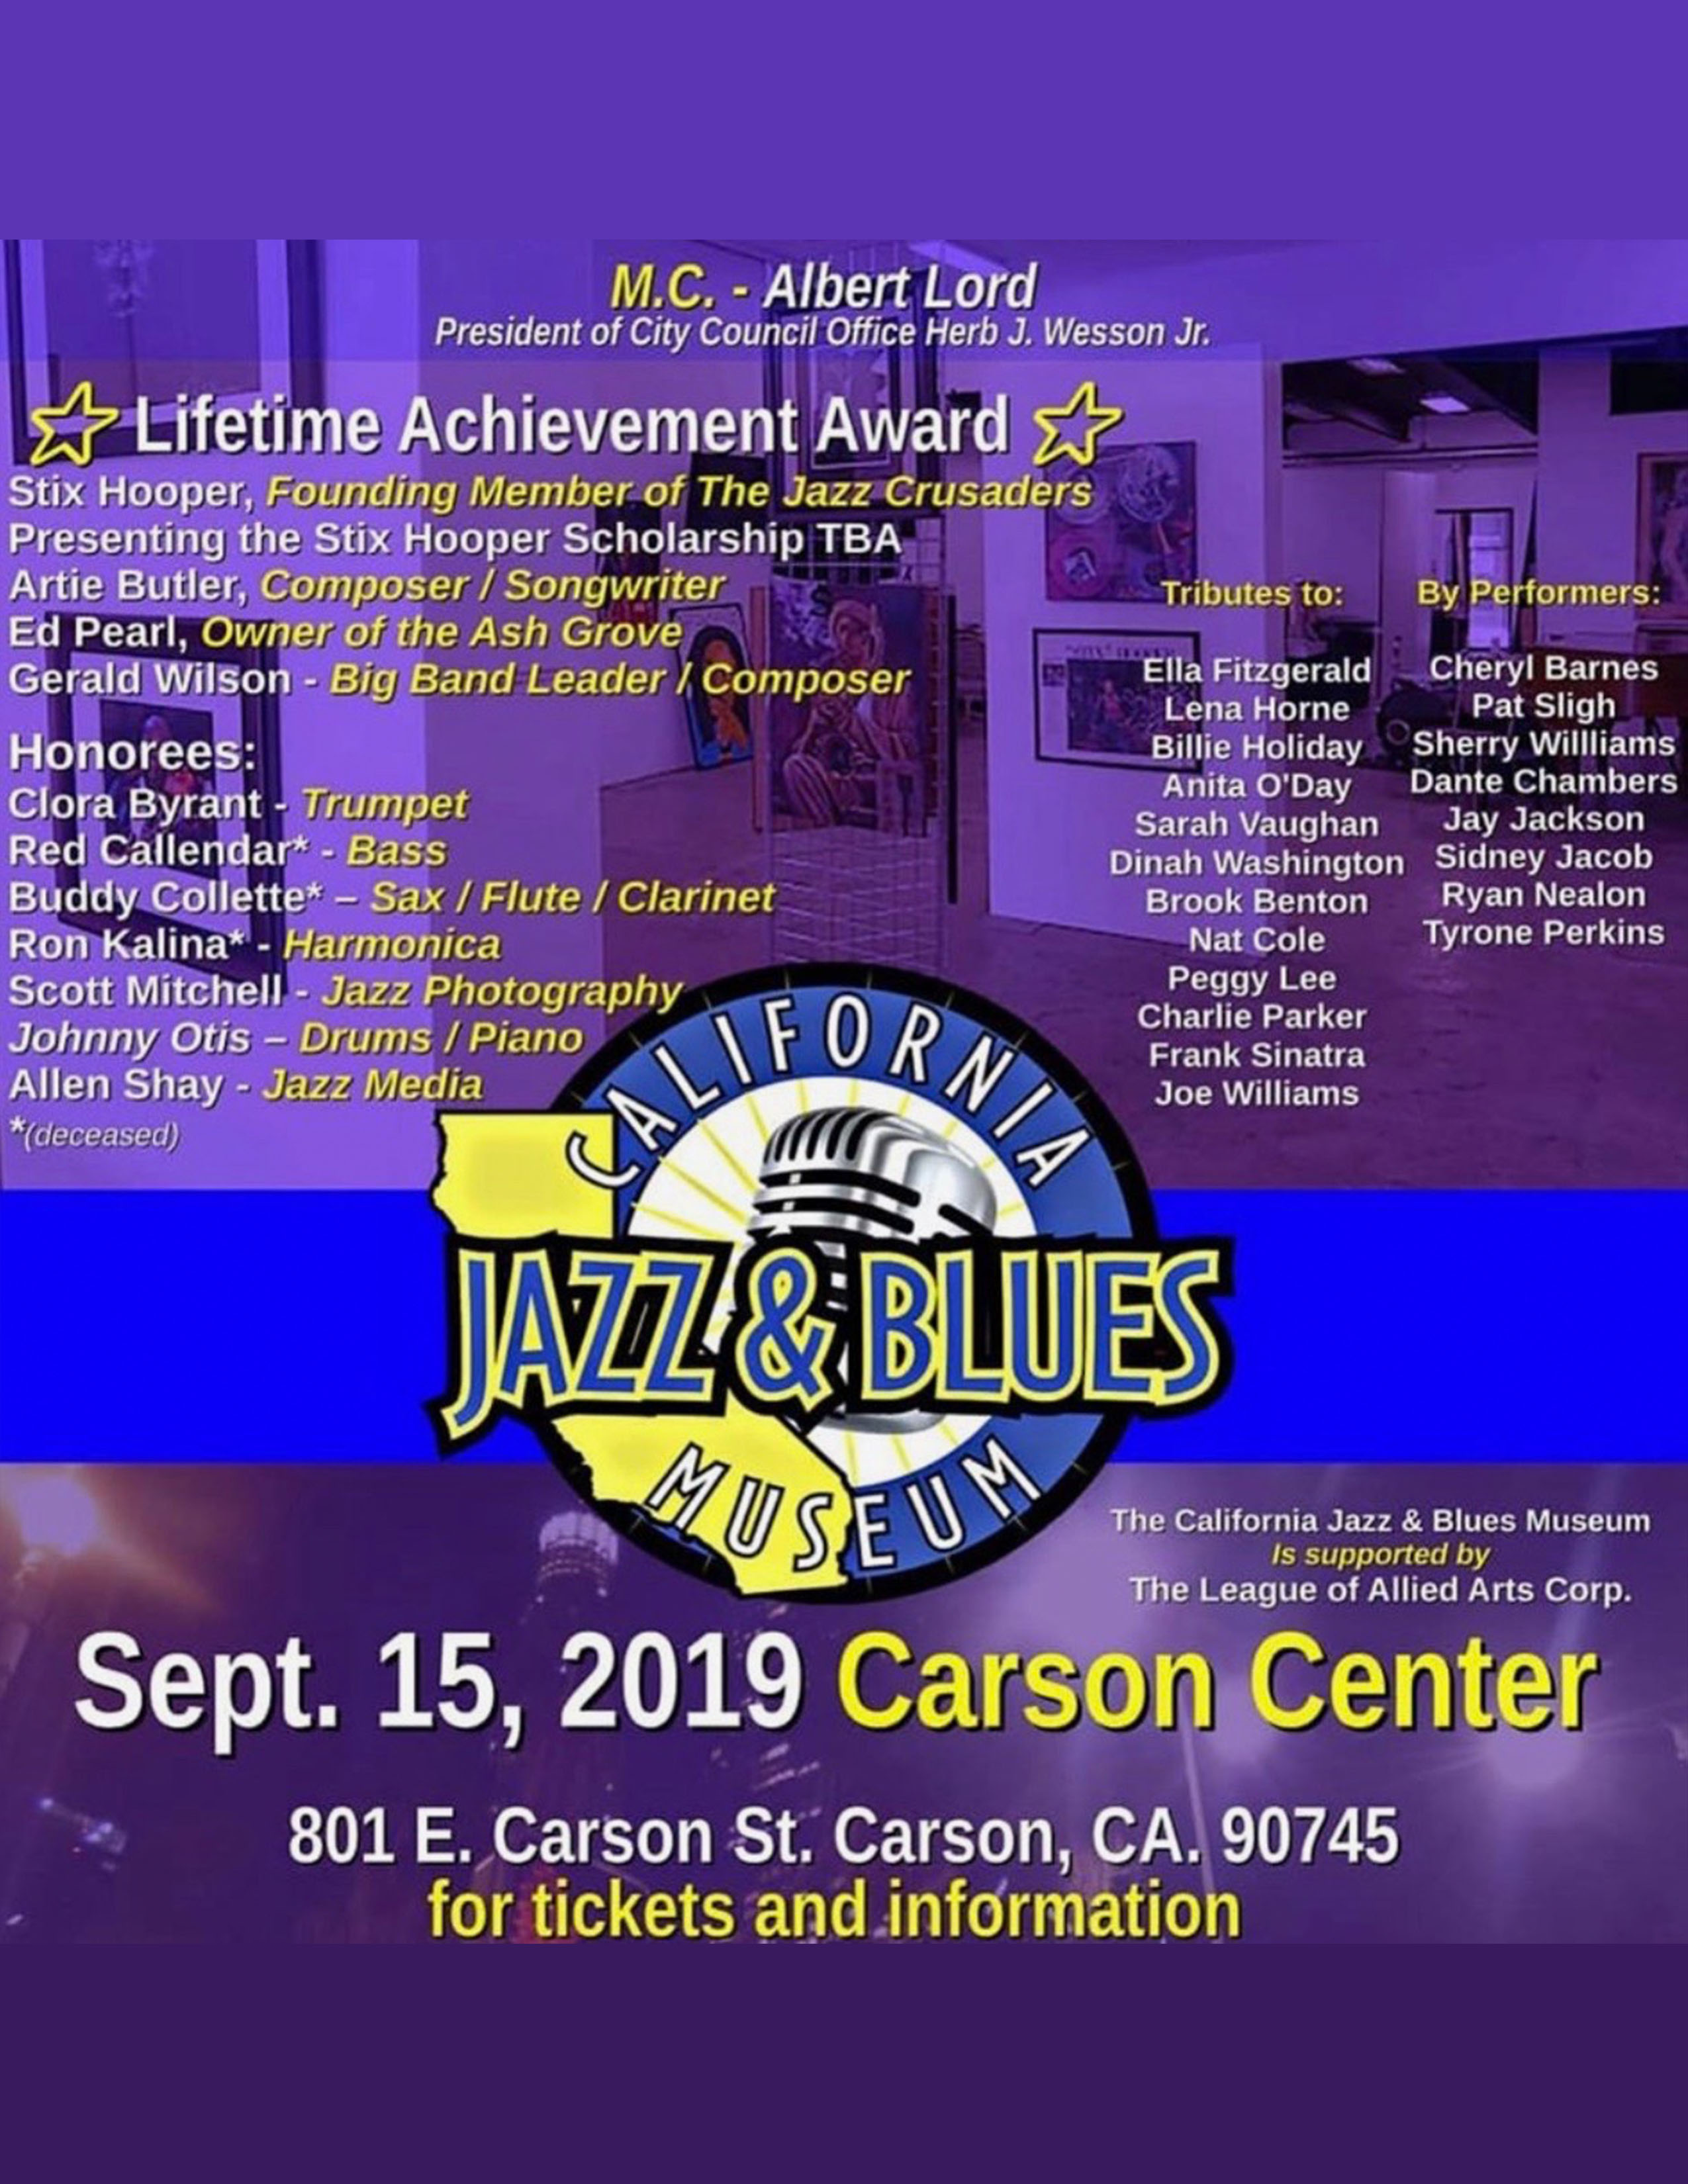 California Jazz & Blues Museum